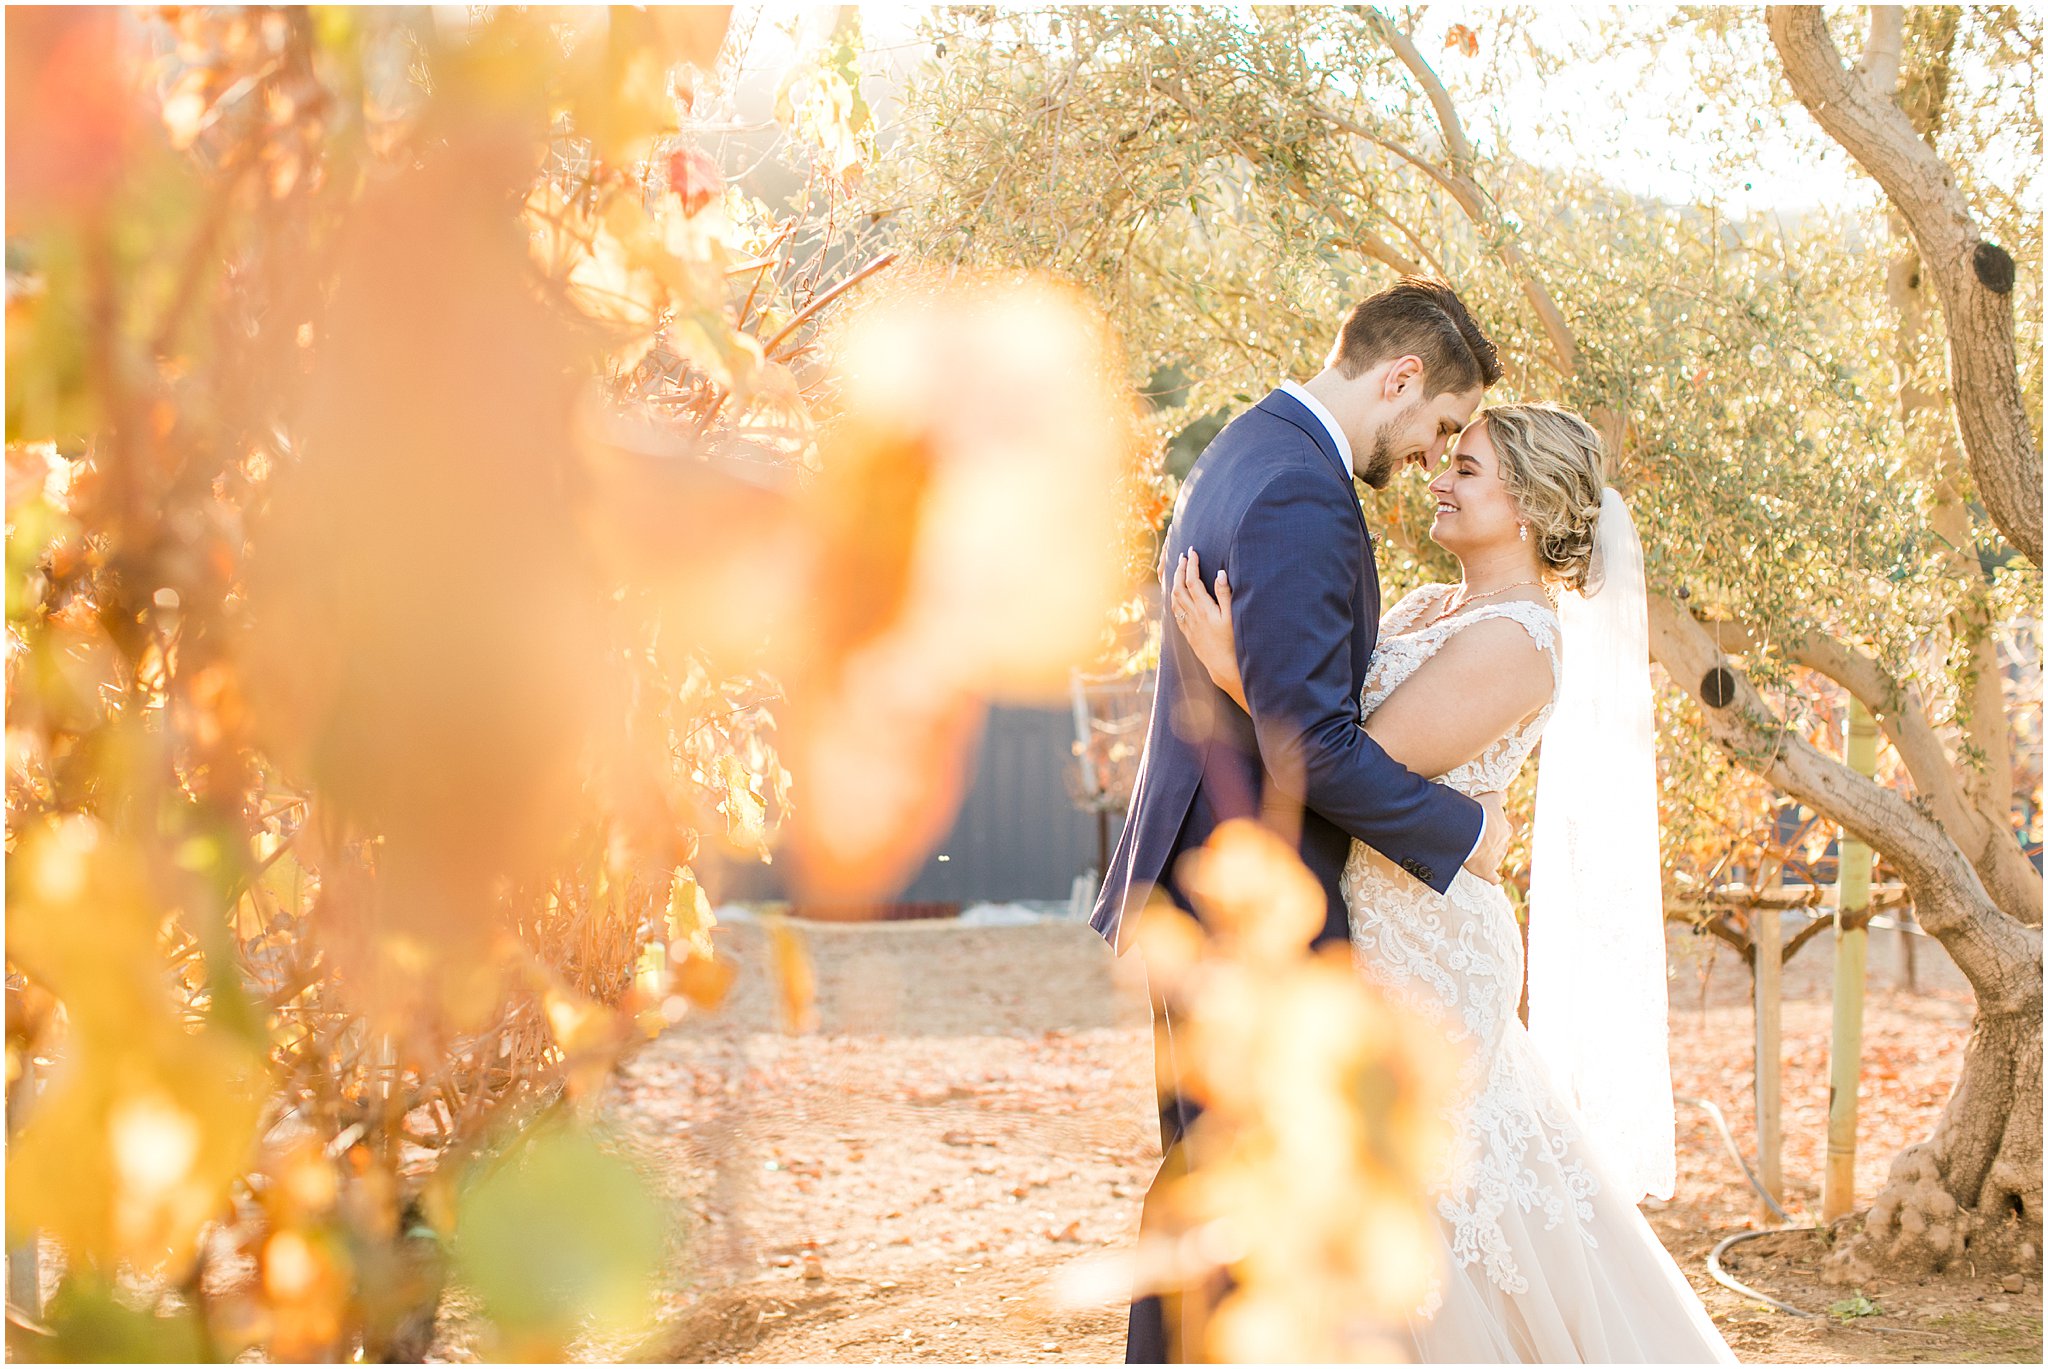 Sycamore Creek Vineyards Wedding - Live Love Leal - Fall Wedding - Bay Area Wedding Photographer - Angela Sue Photography_0114.jpg